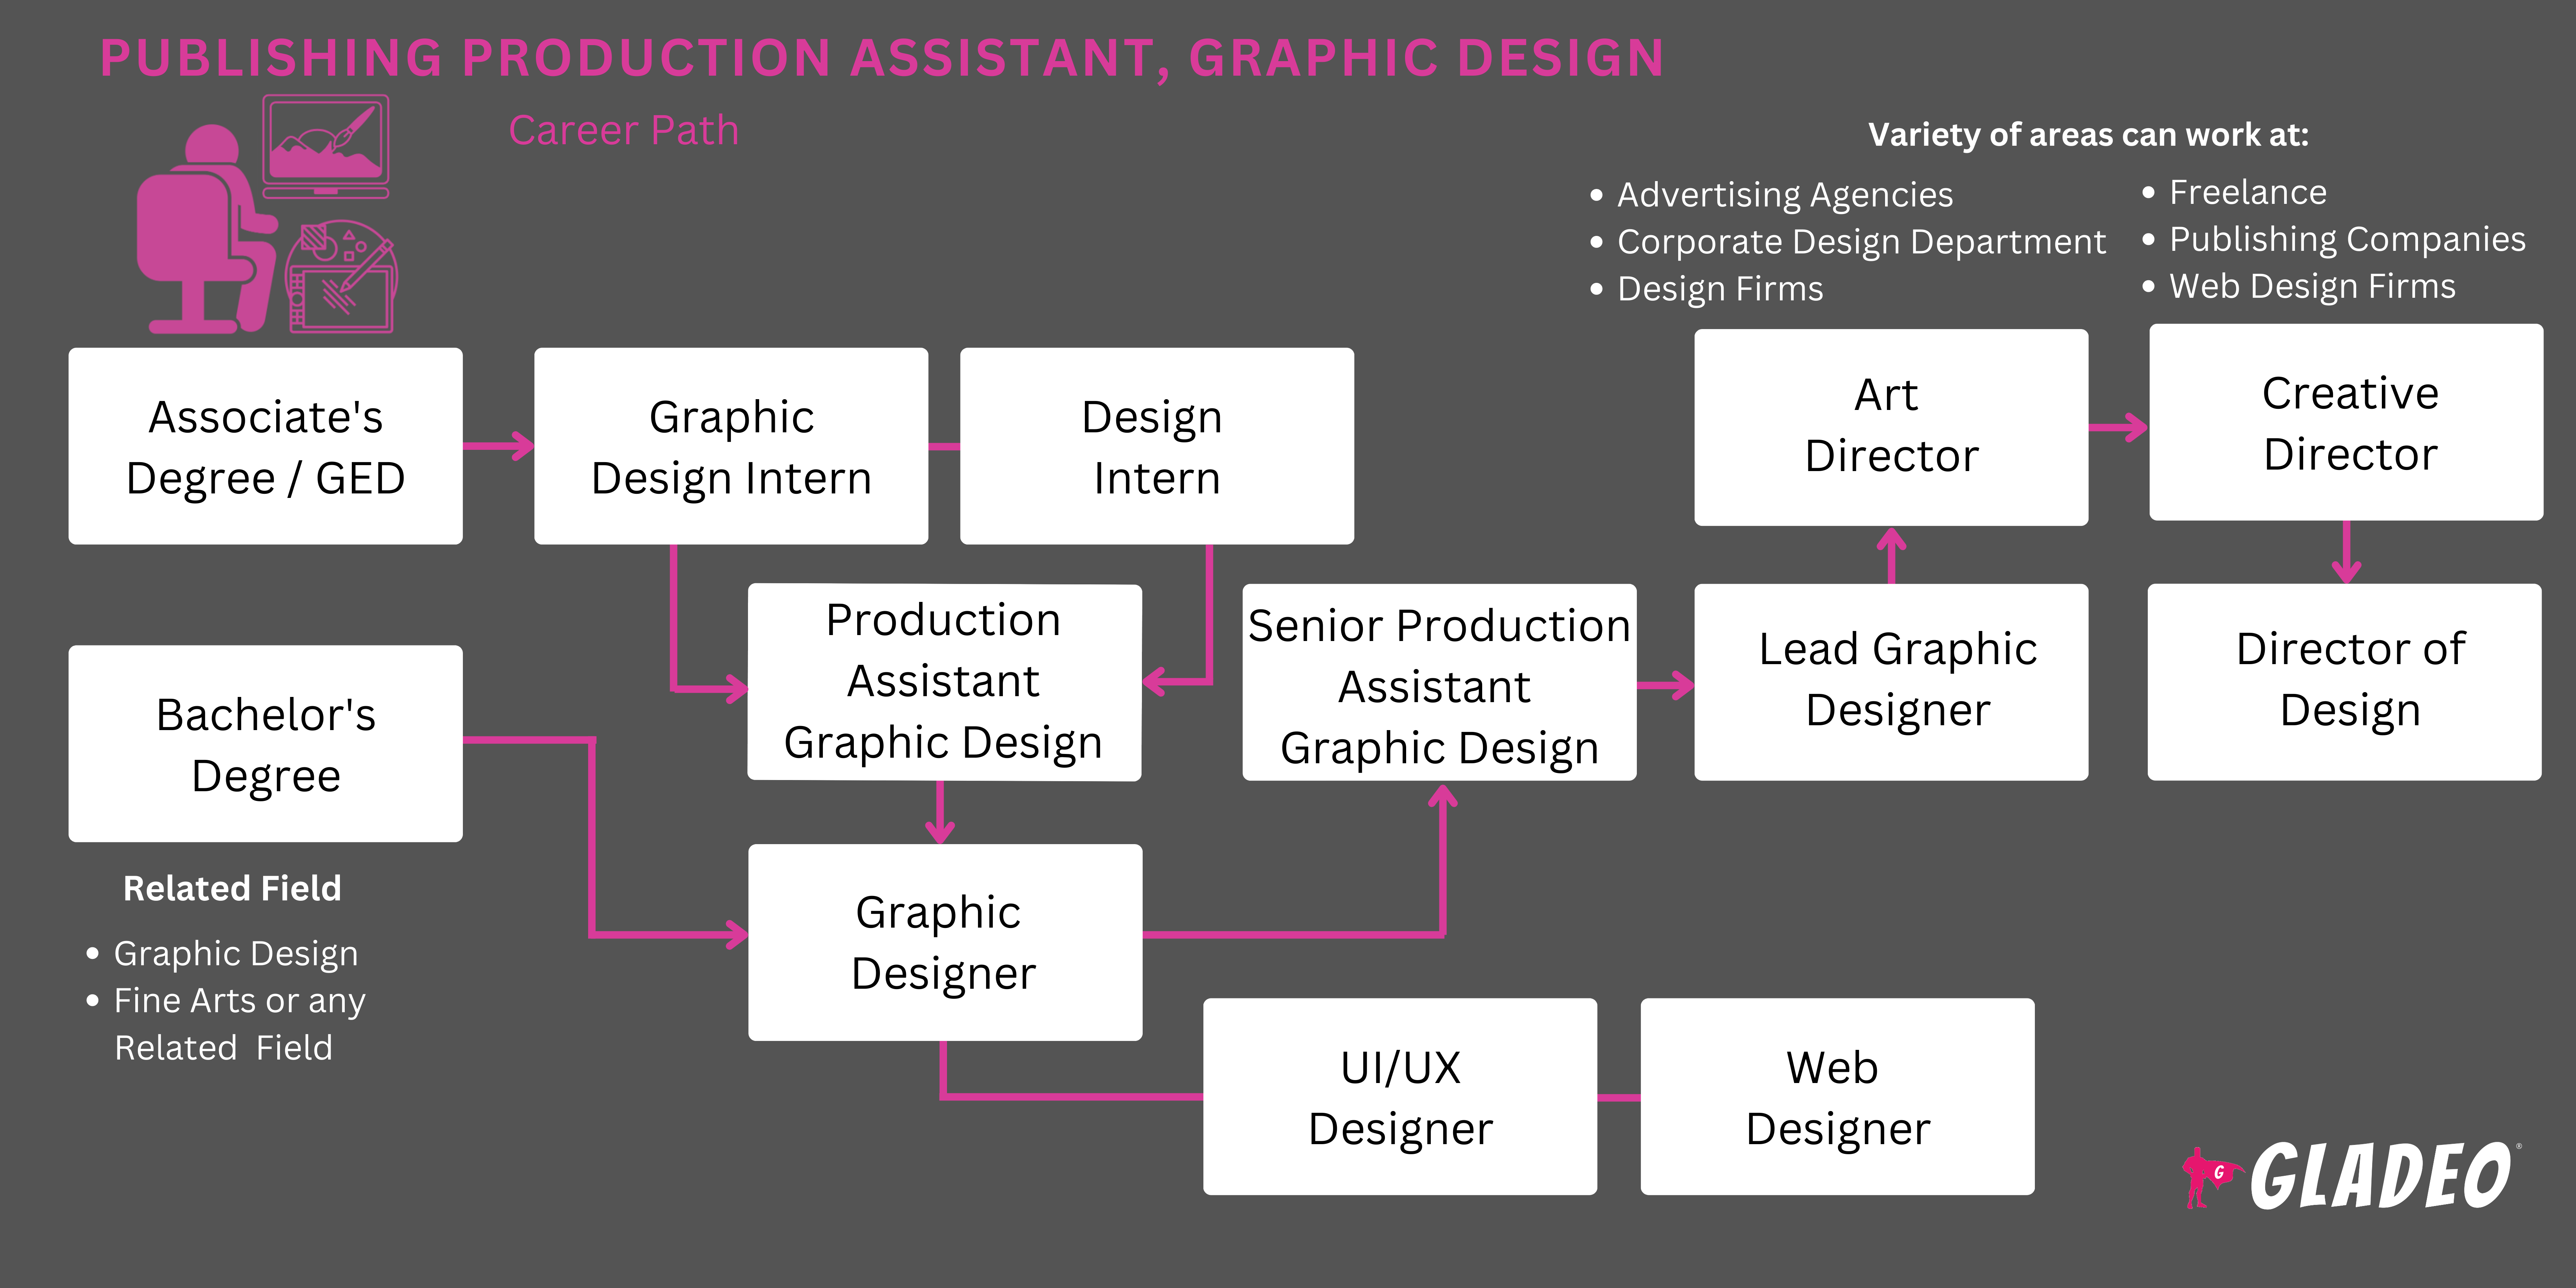 Publishing Production Assistant, Graphic Design Roadmap